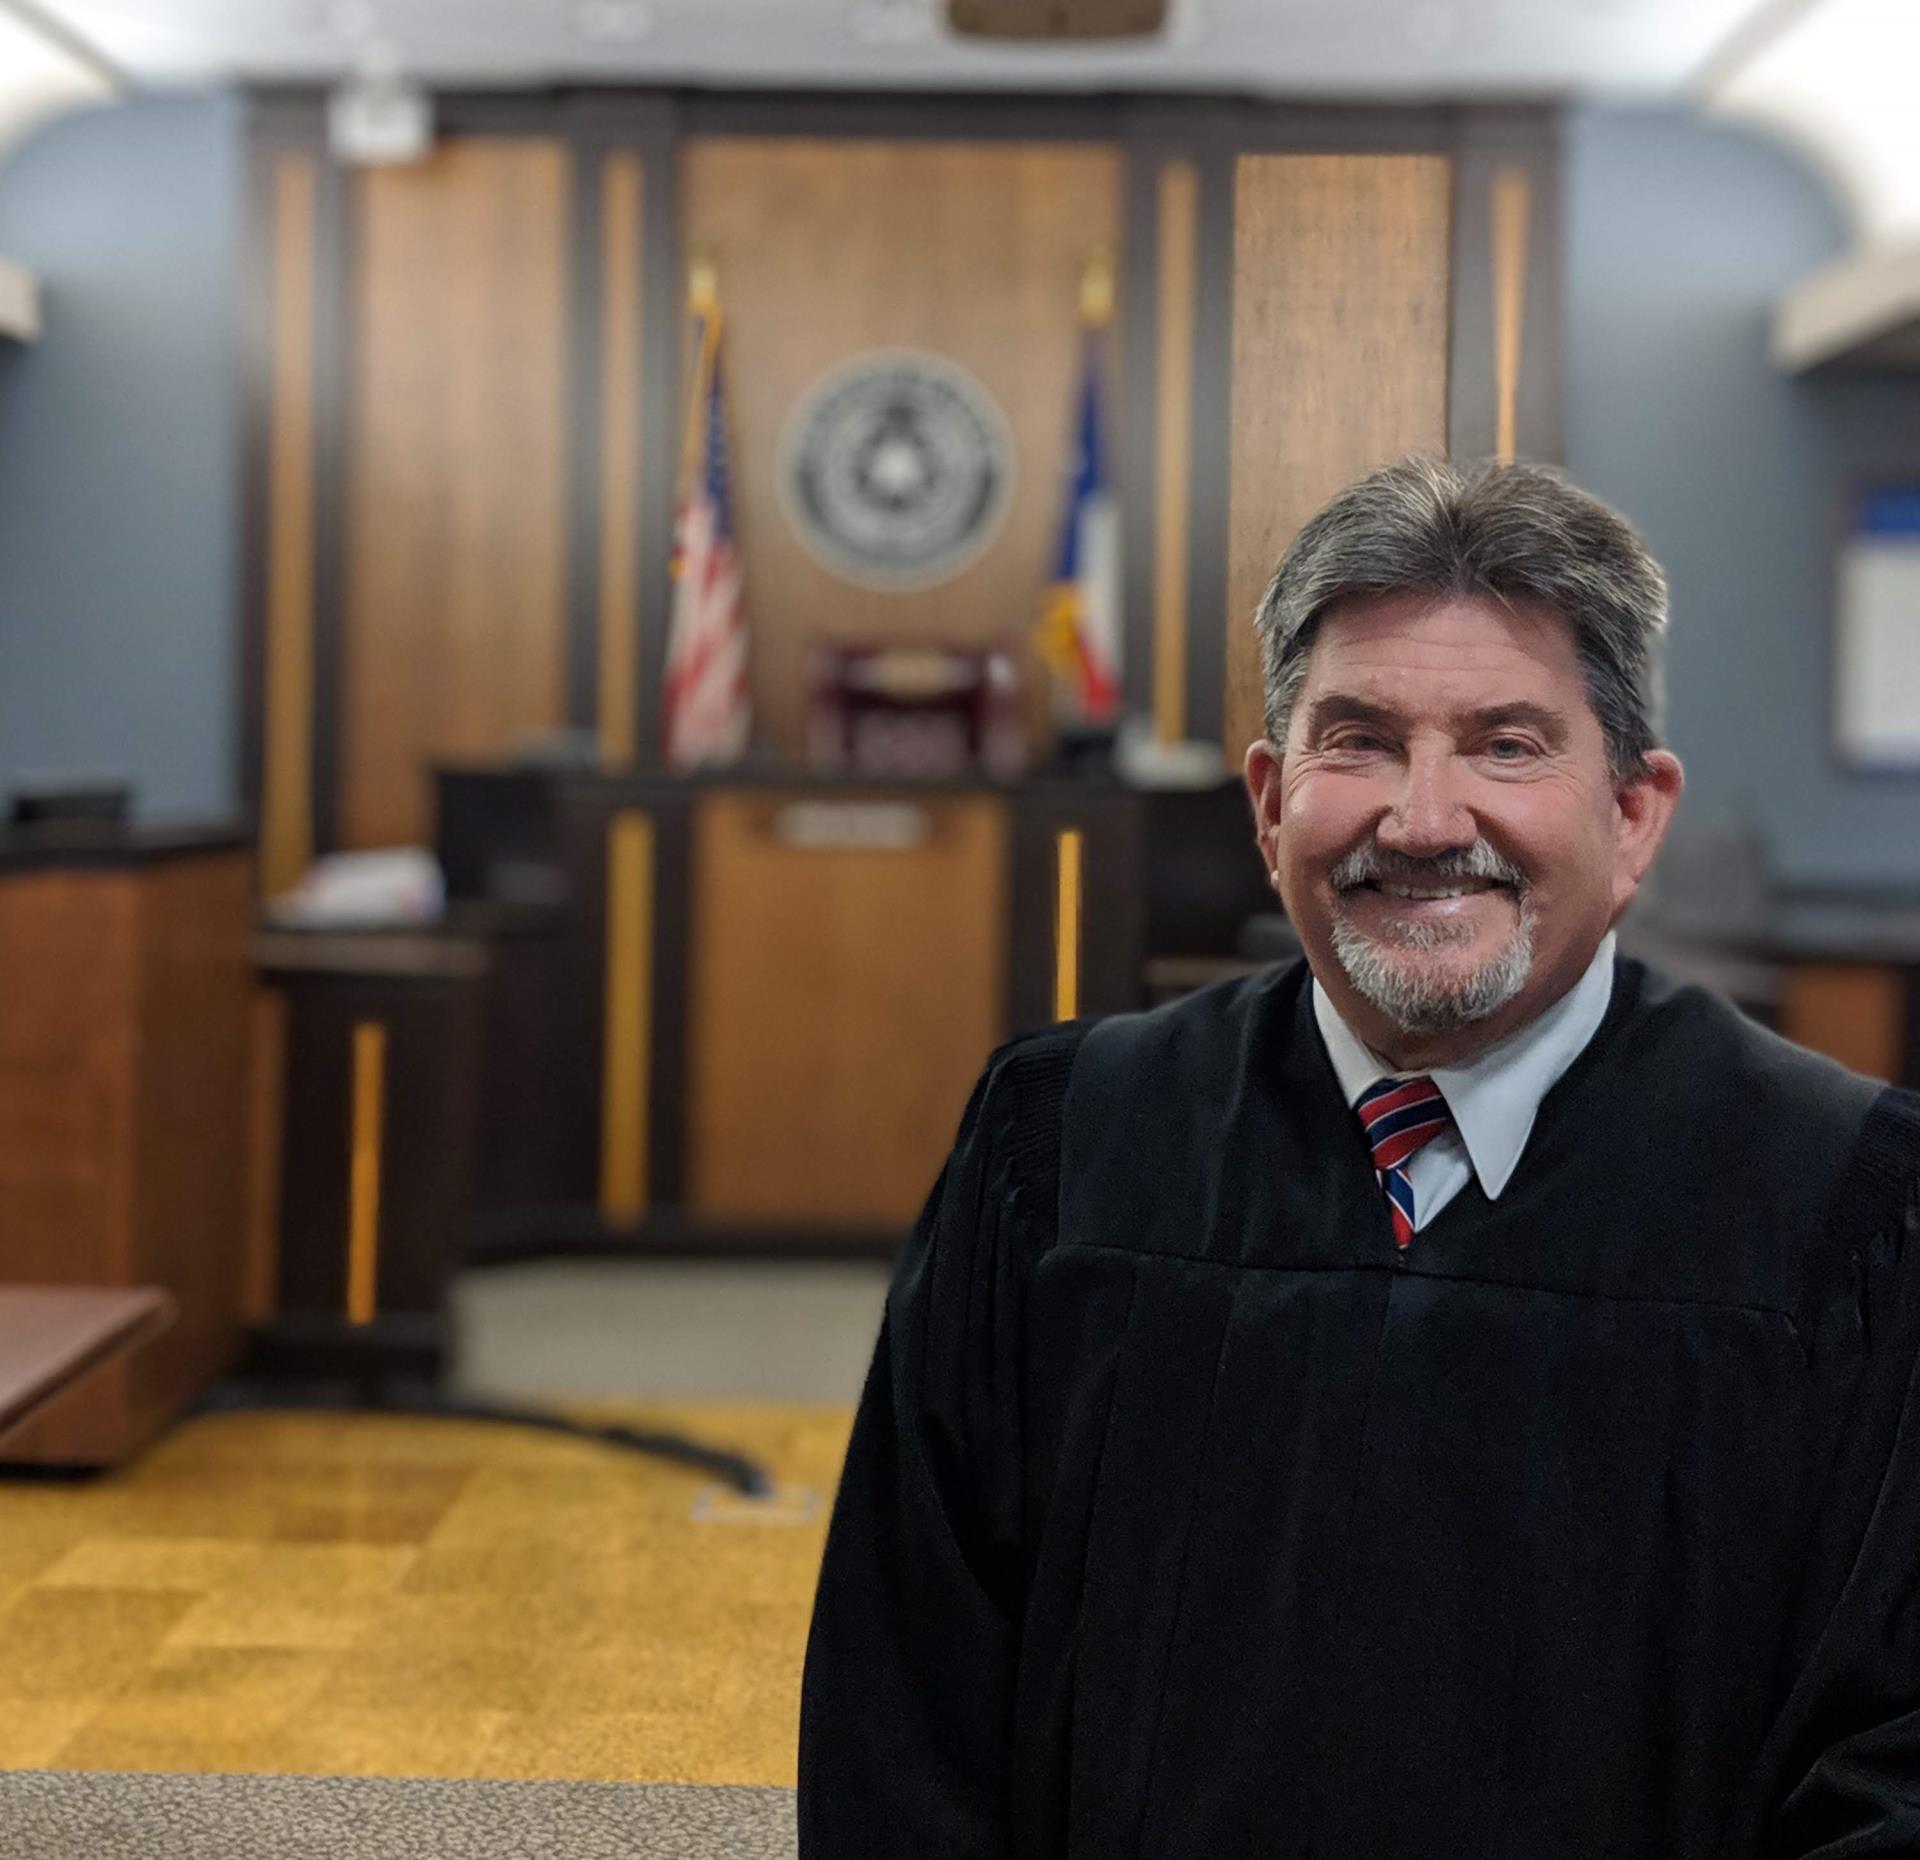 Judge Ewing